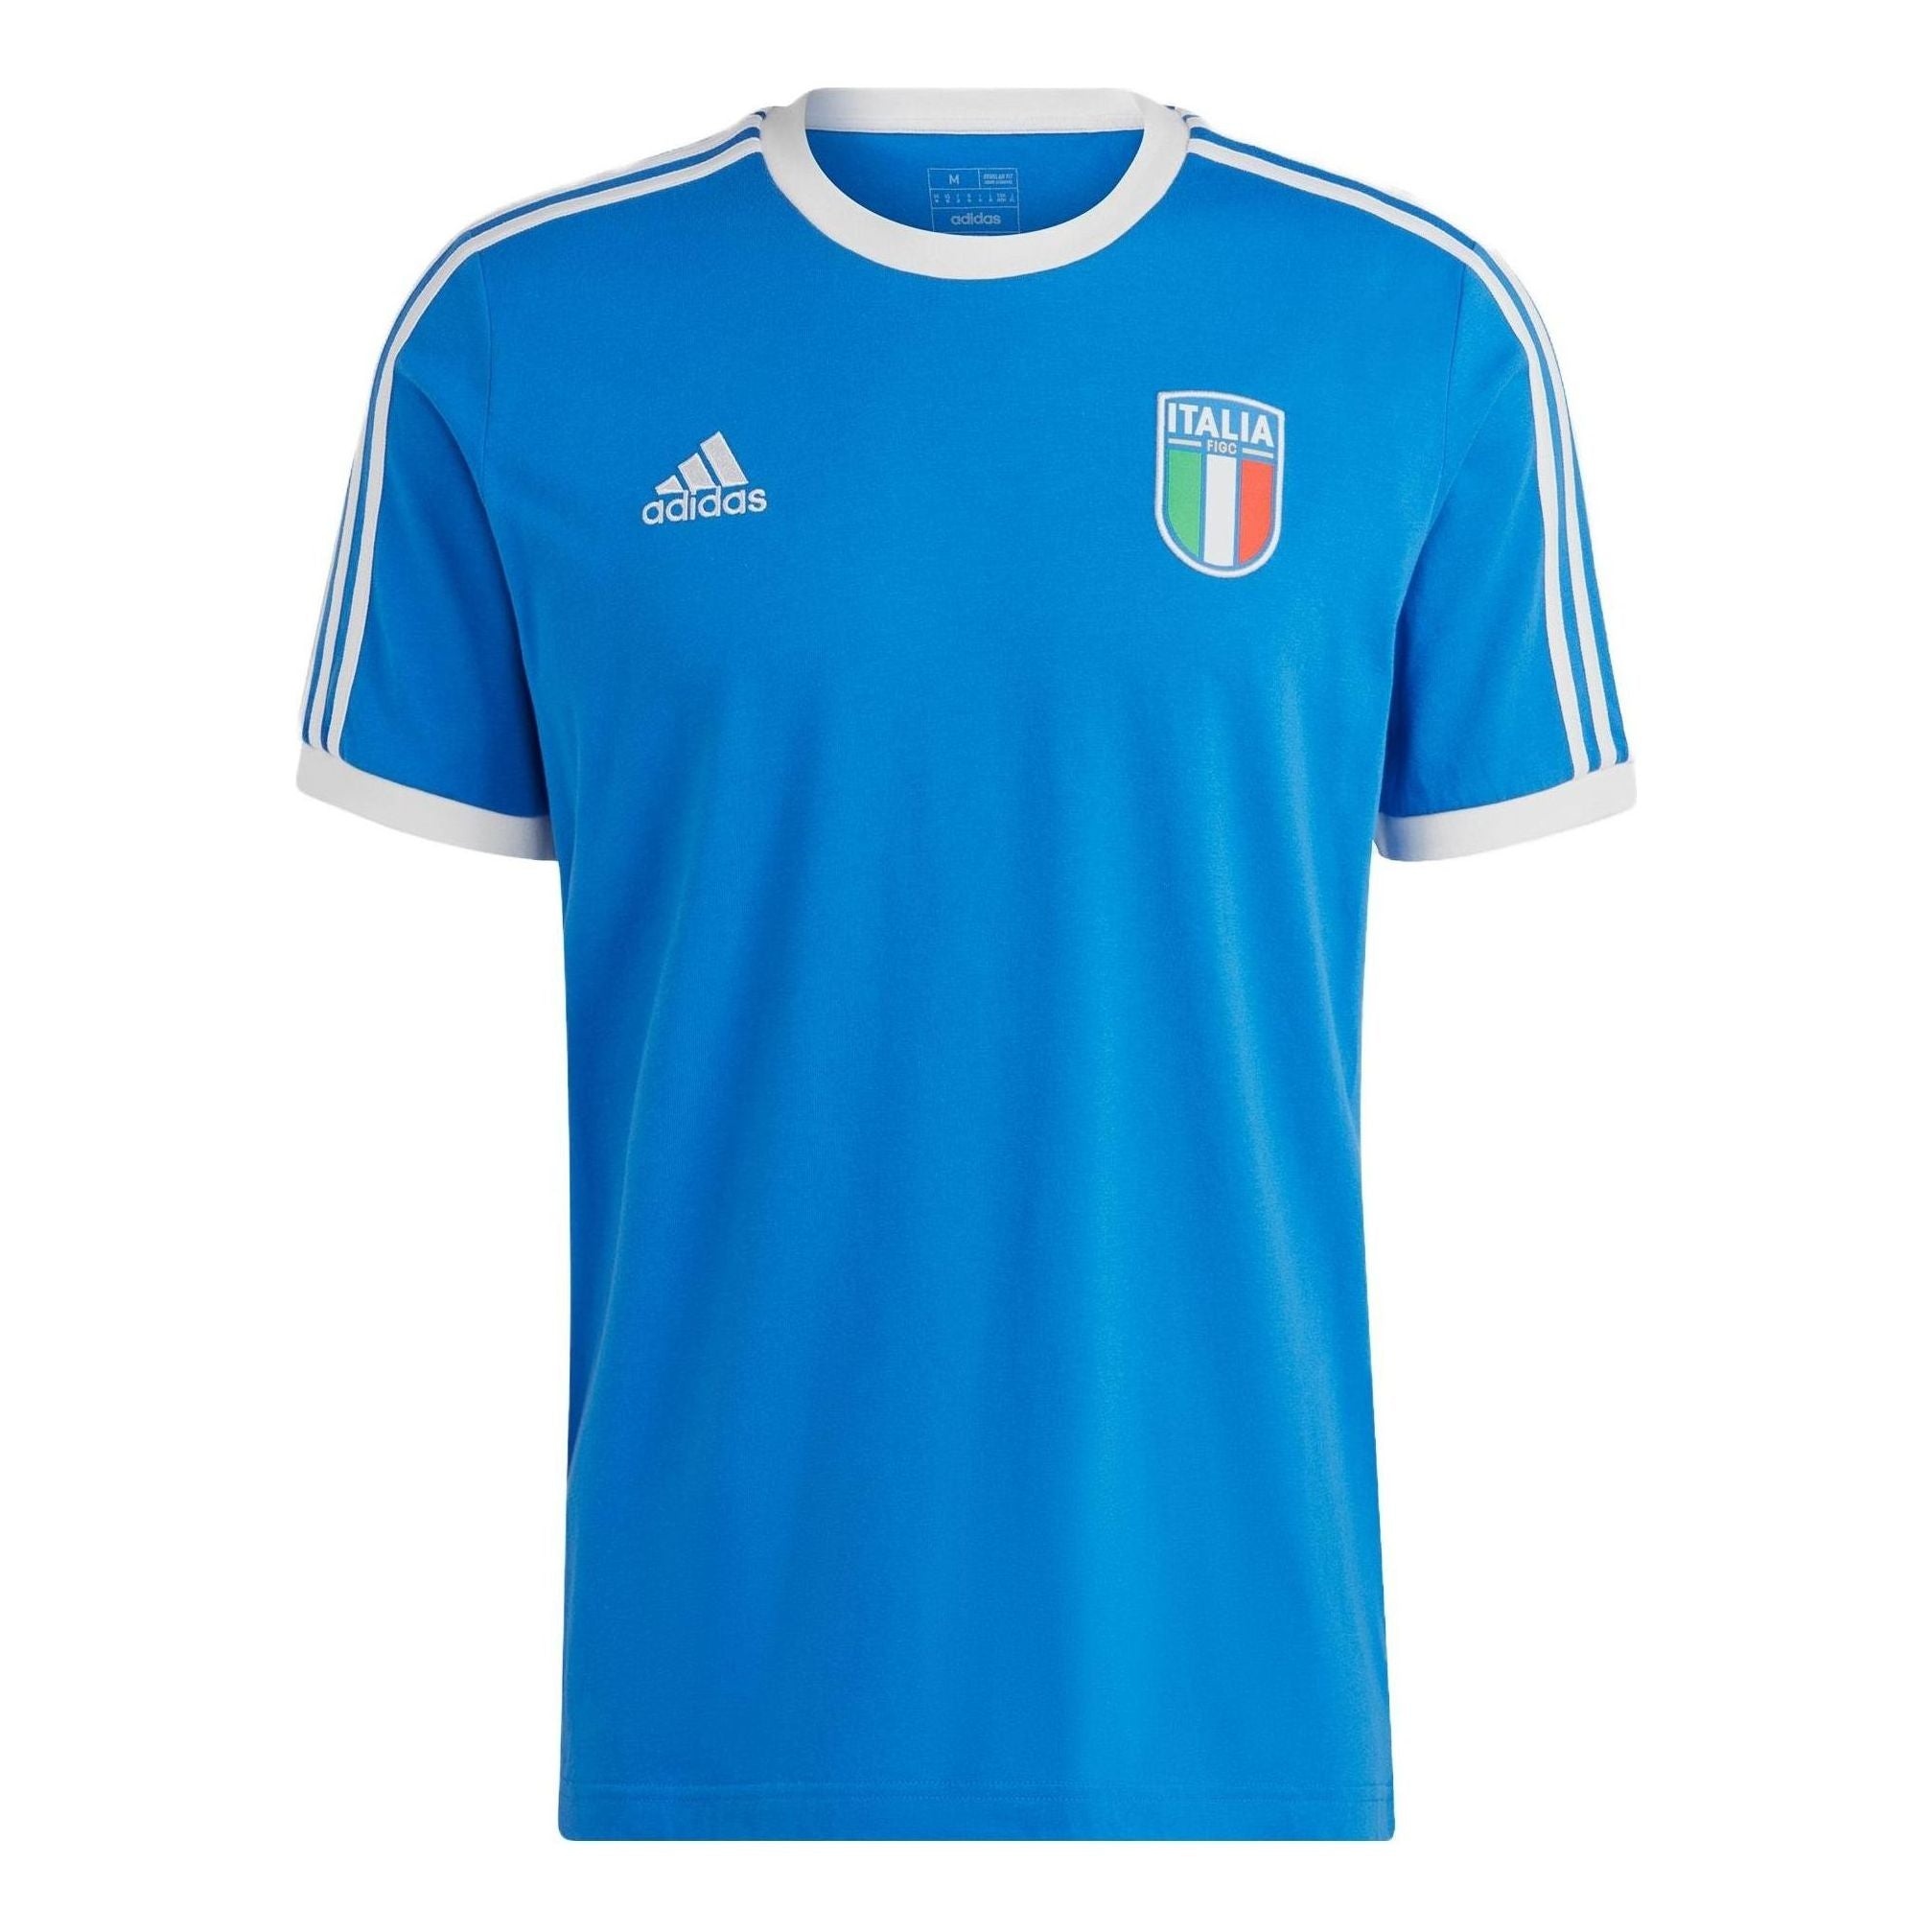 adidas Italy 3-Stripes Tee 'Blue' HT2185 - 1